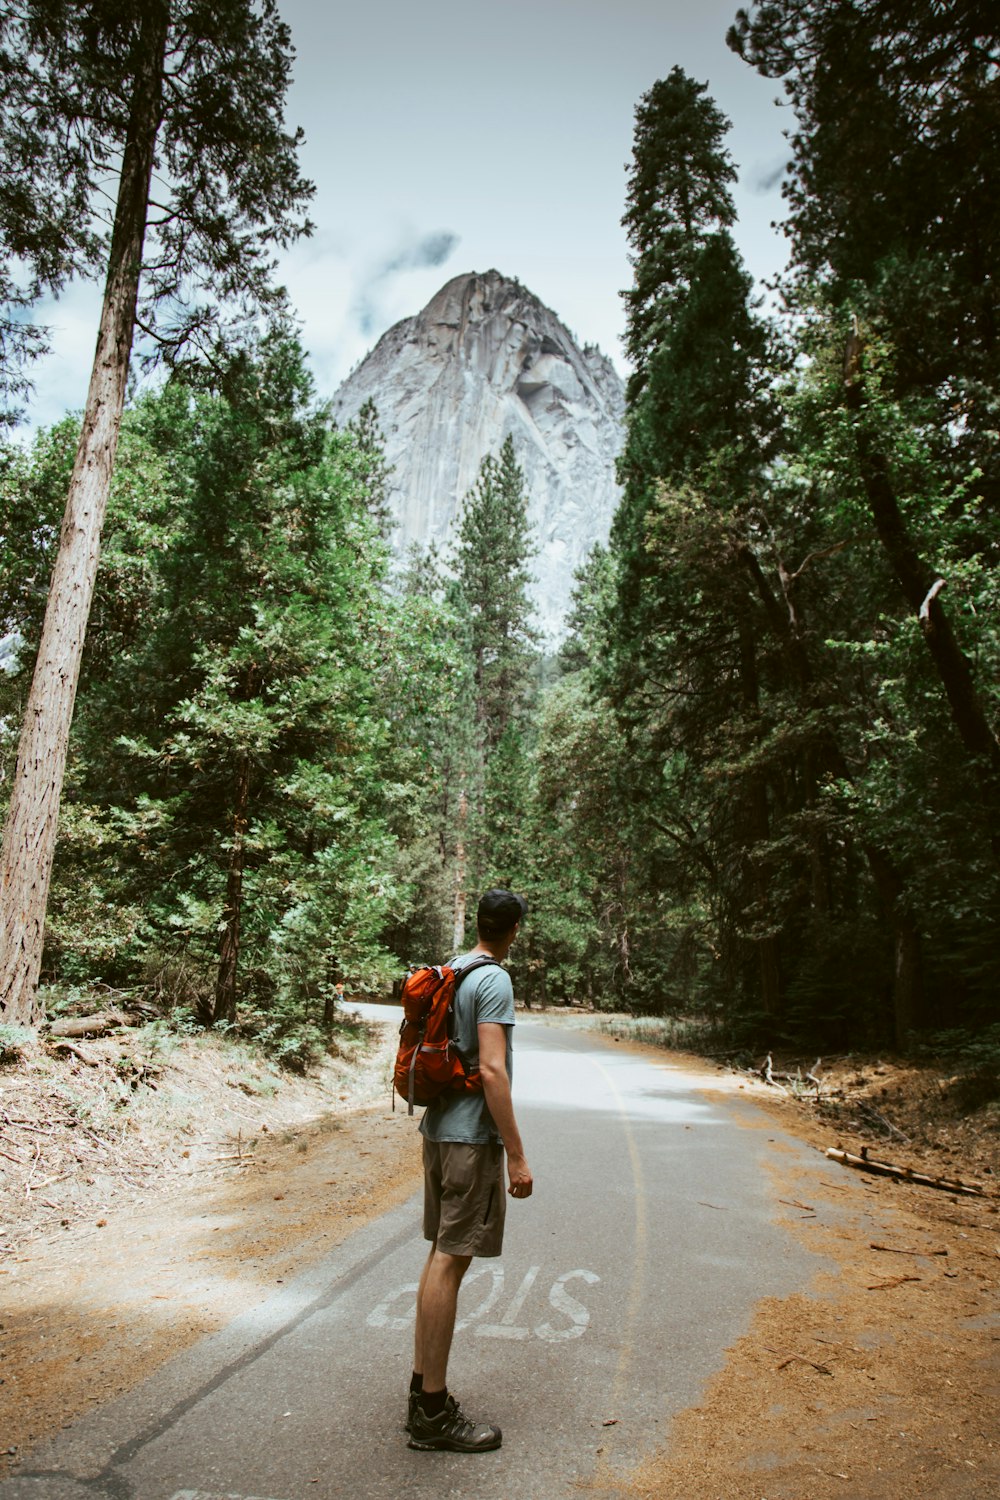 Mann trägt roten Campingrucksack in der Nähe des Berges